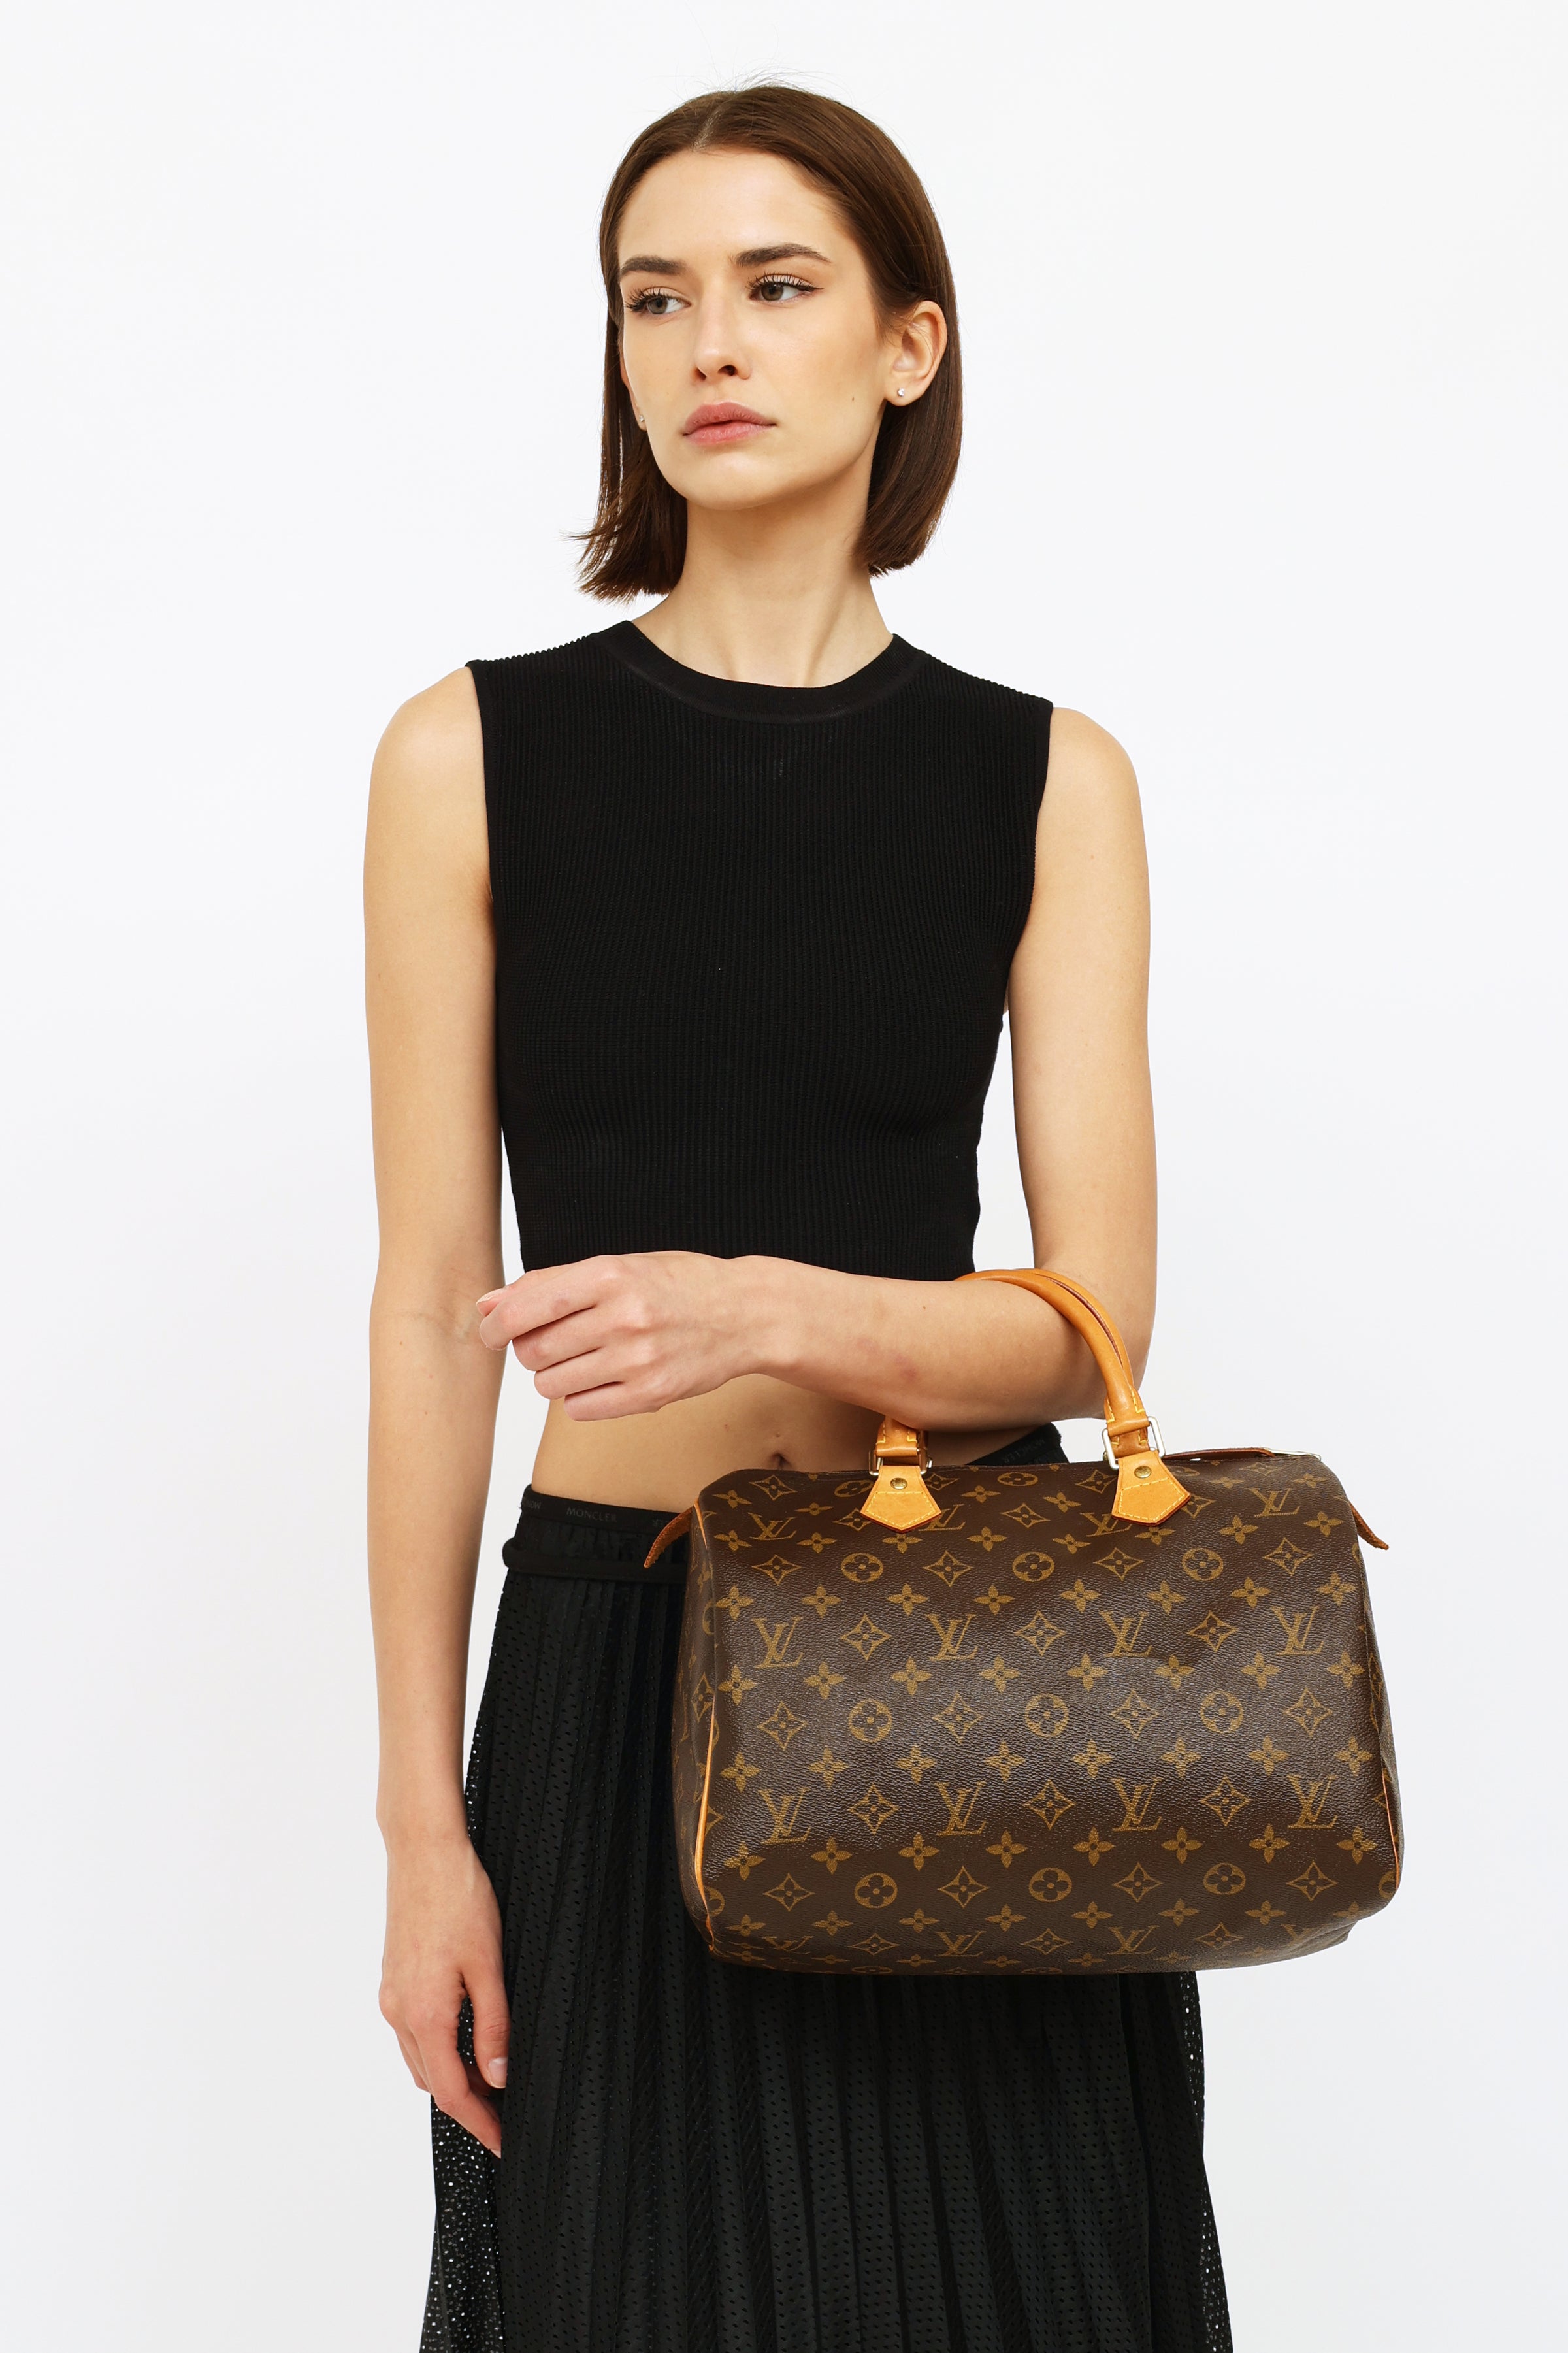 Louis Vuitton Speedy Shoulder bag 380363